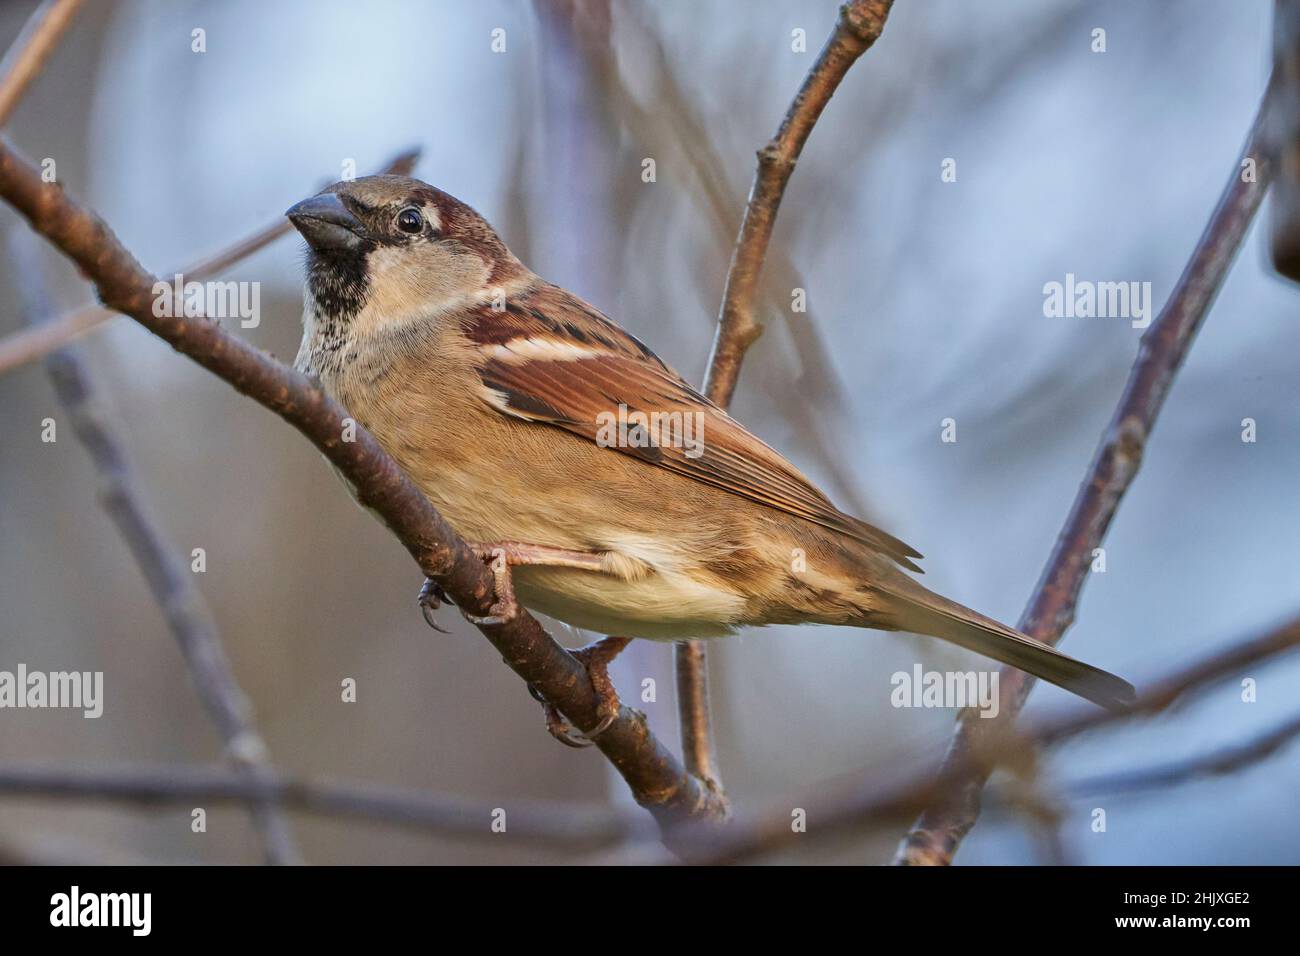 Adult house sparrow in UK garden Stock Photo